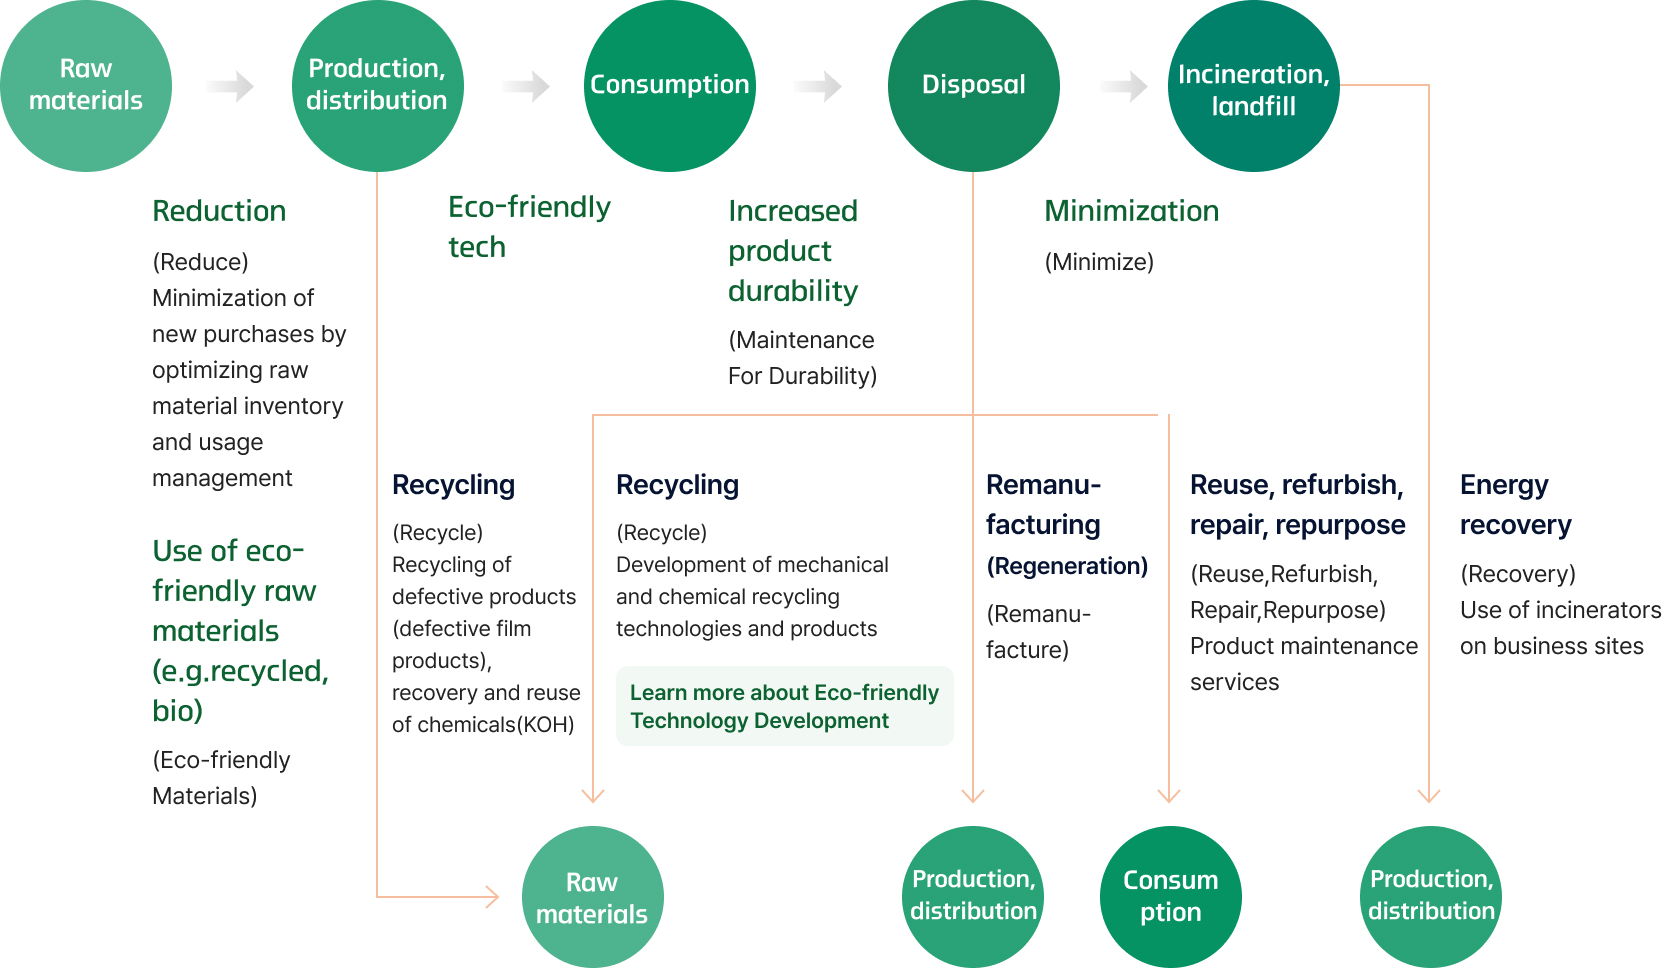 Raw materials->Production, distribution->Consumption->Disposal->Incineration, landfill